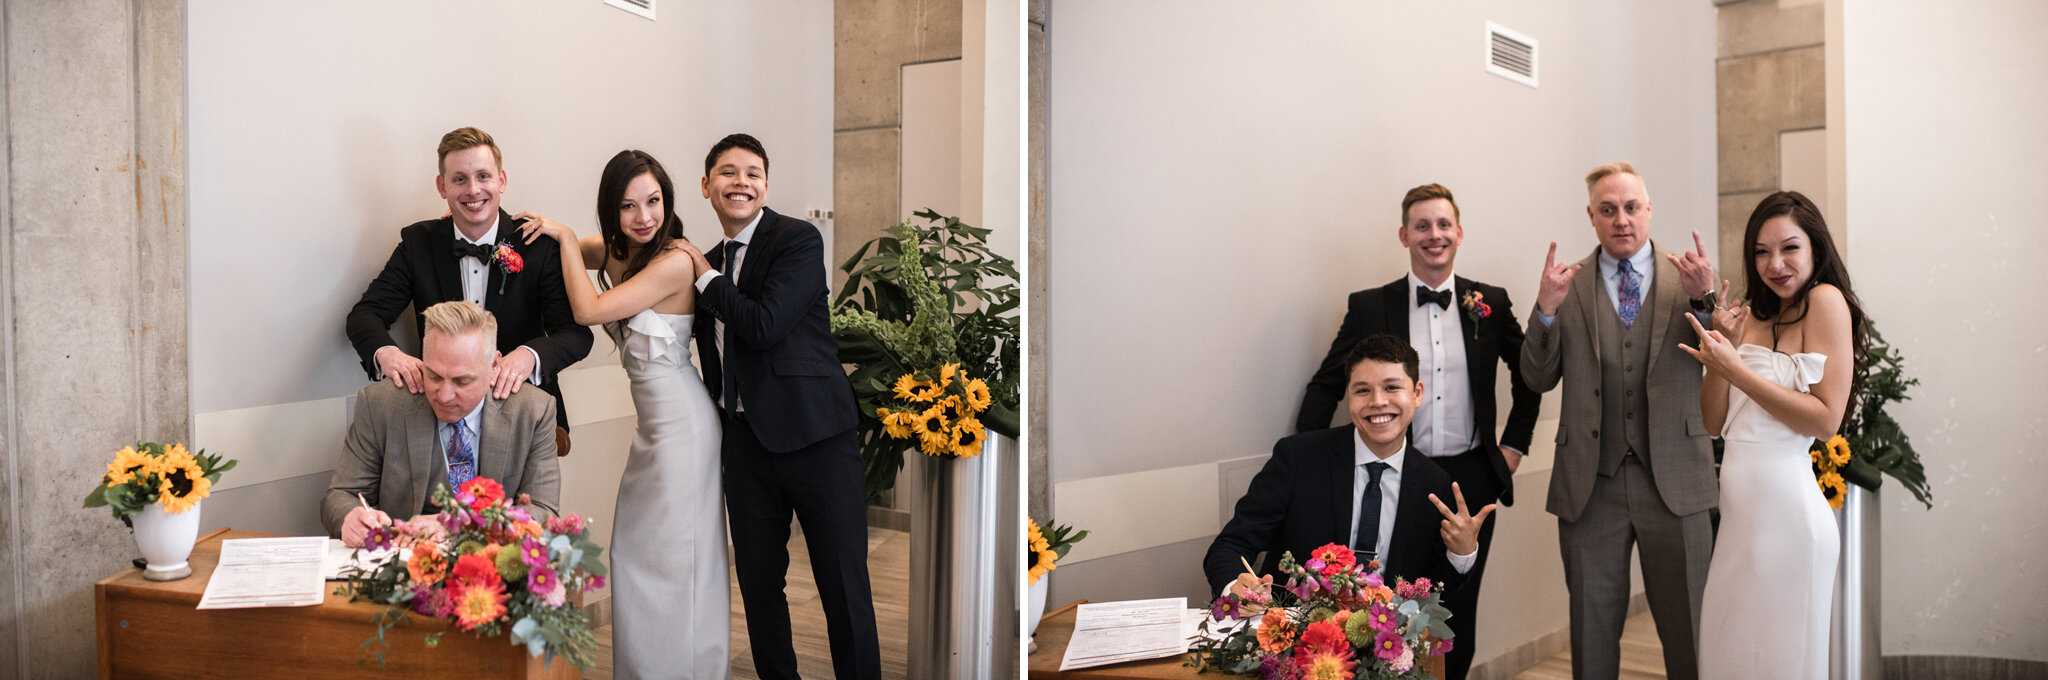 411-wedding-registry-signing-city-hall-fun-family-bride-groom.jpg